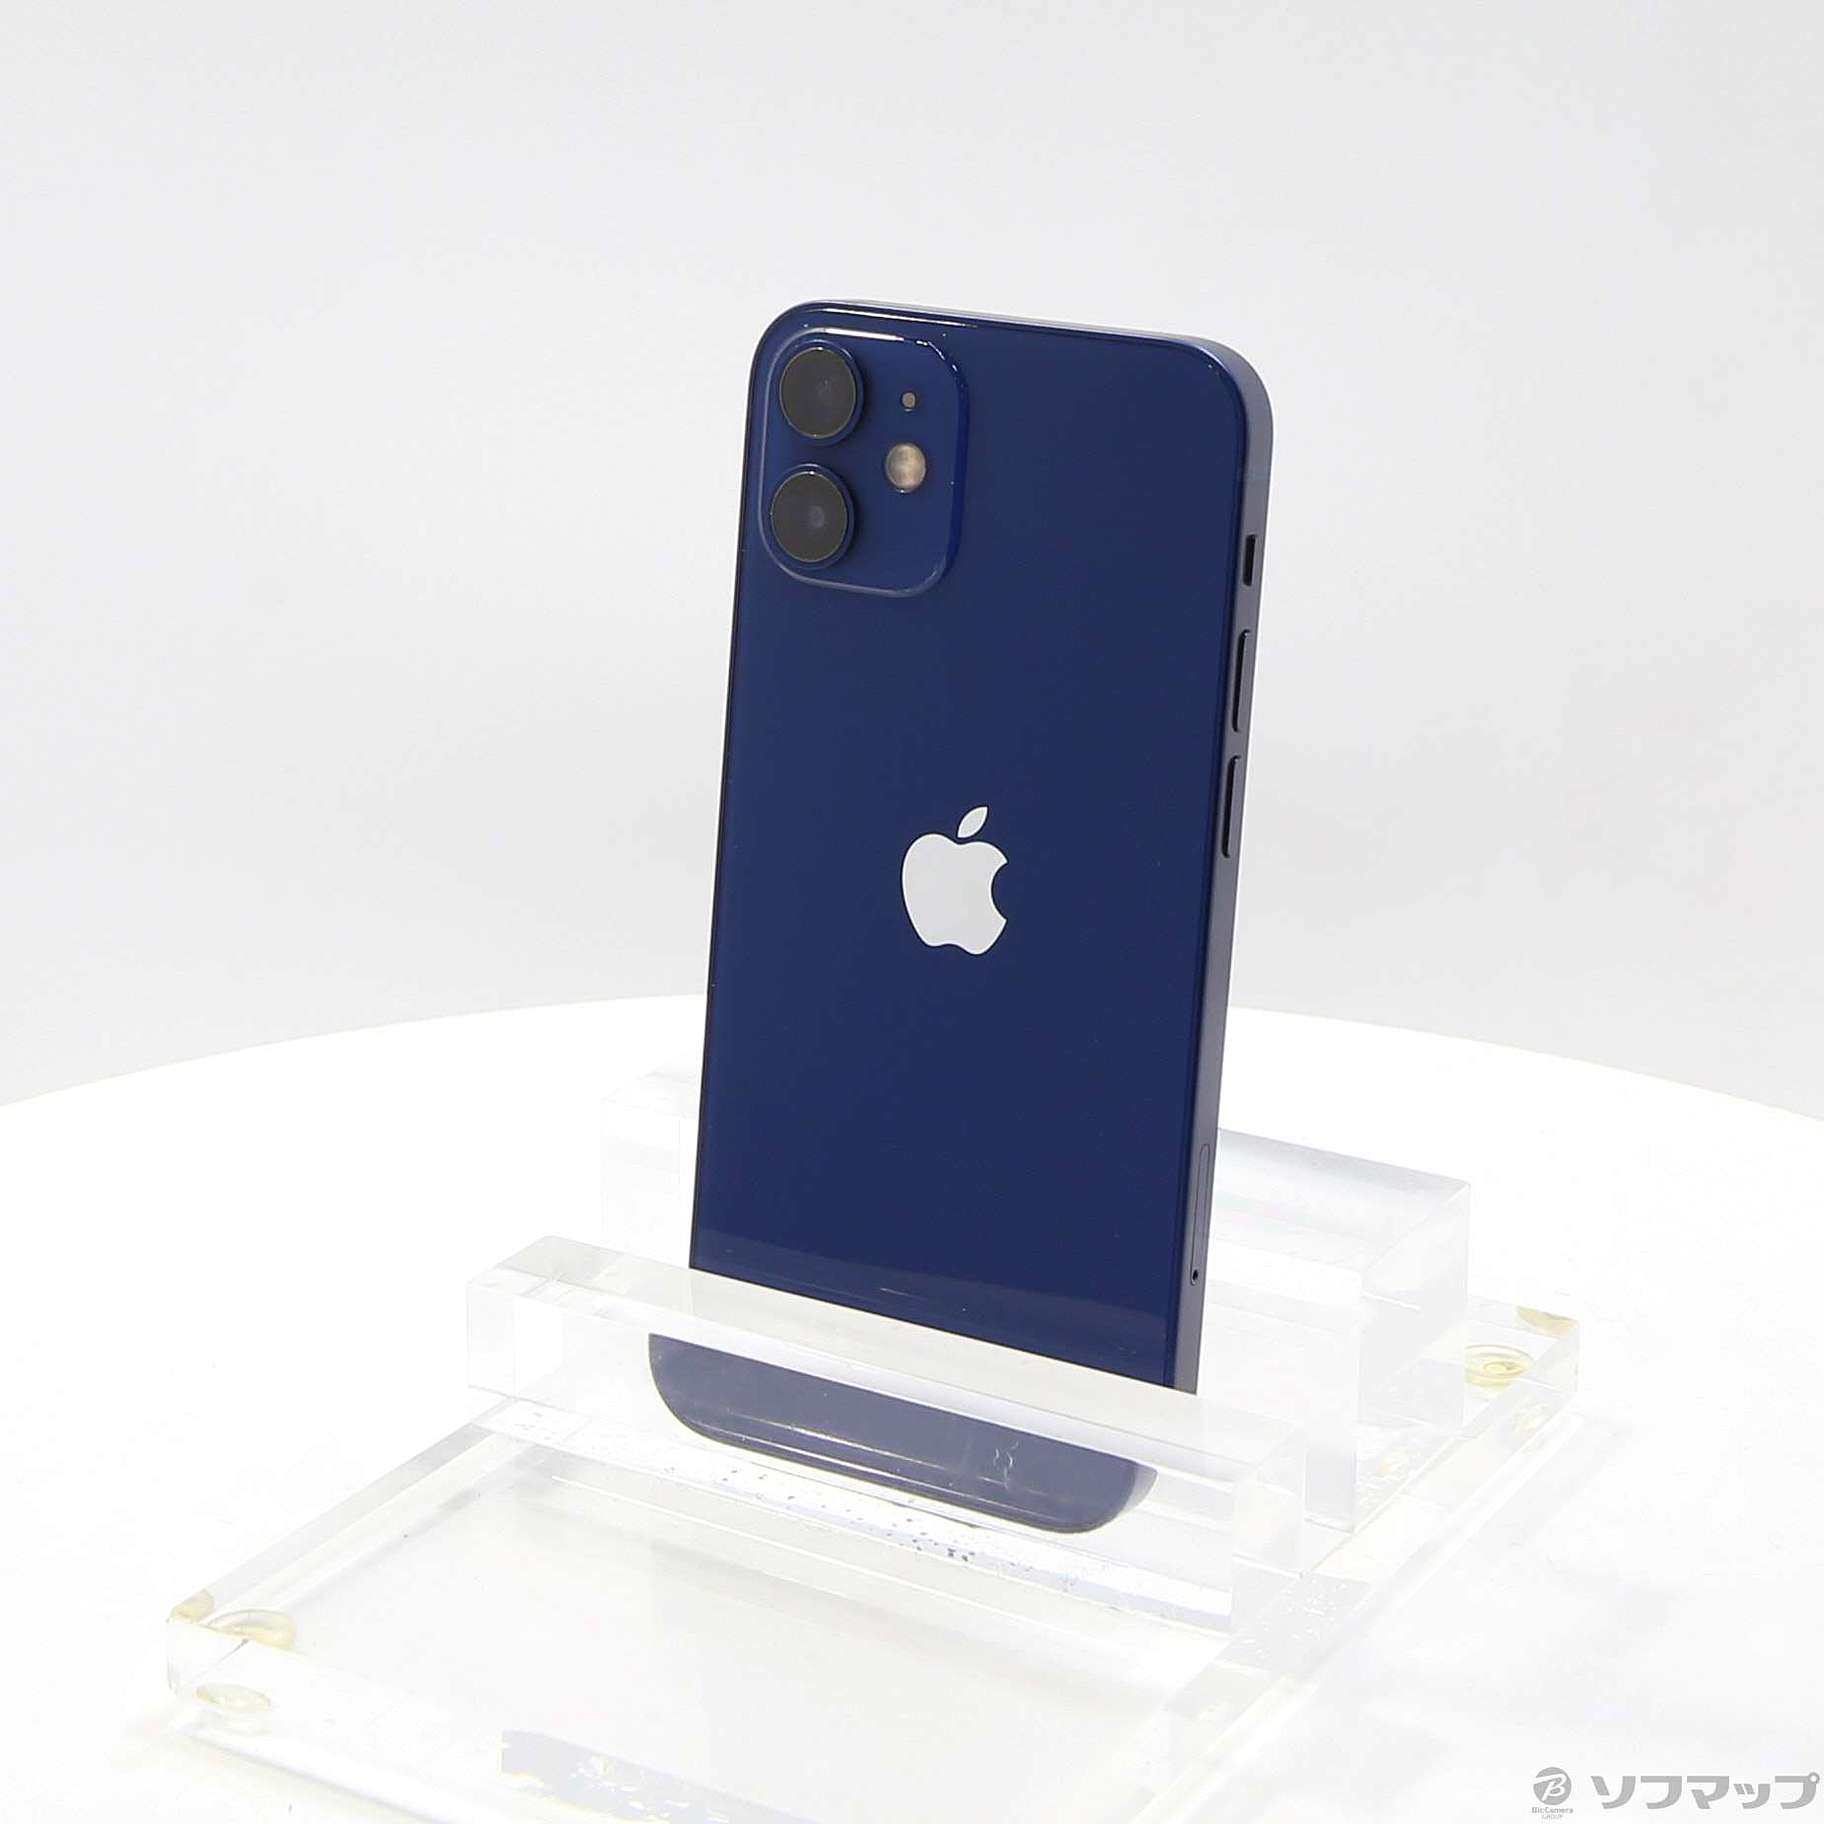 iPhone12 mini 64G blue simフリー - スマートフォン本体